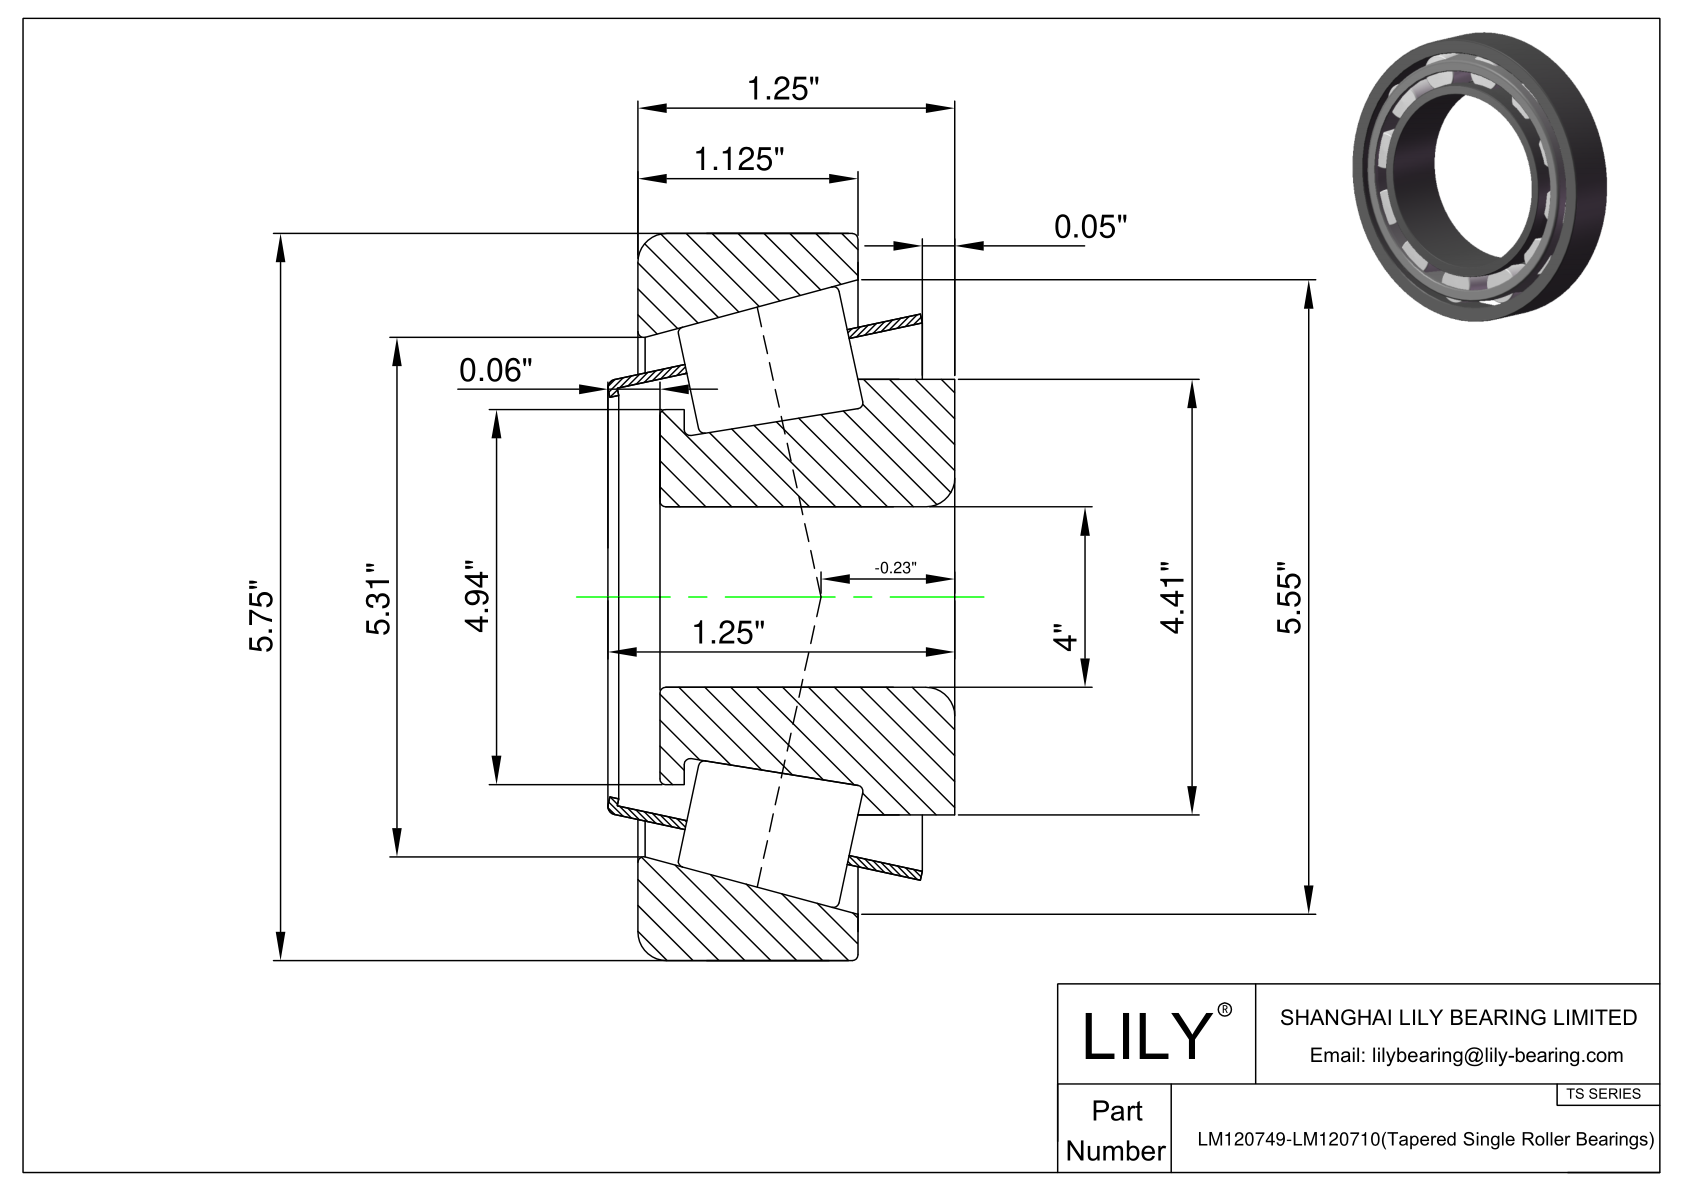 LM120749-LM120710 TS系列(圆锥单滚子轴承)(英制) CAD图形